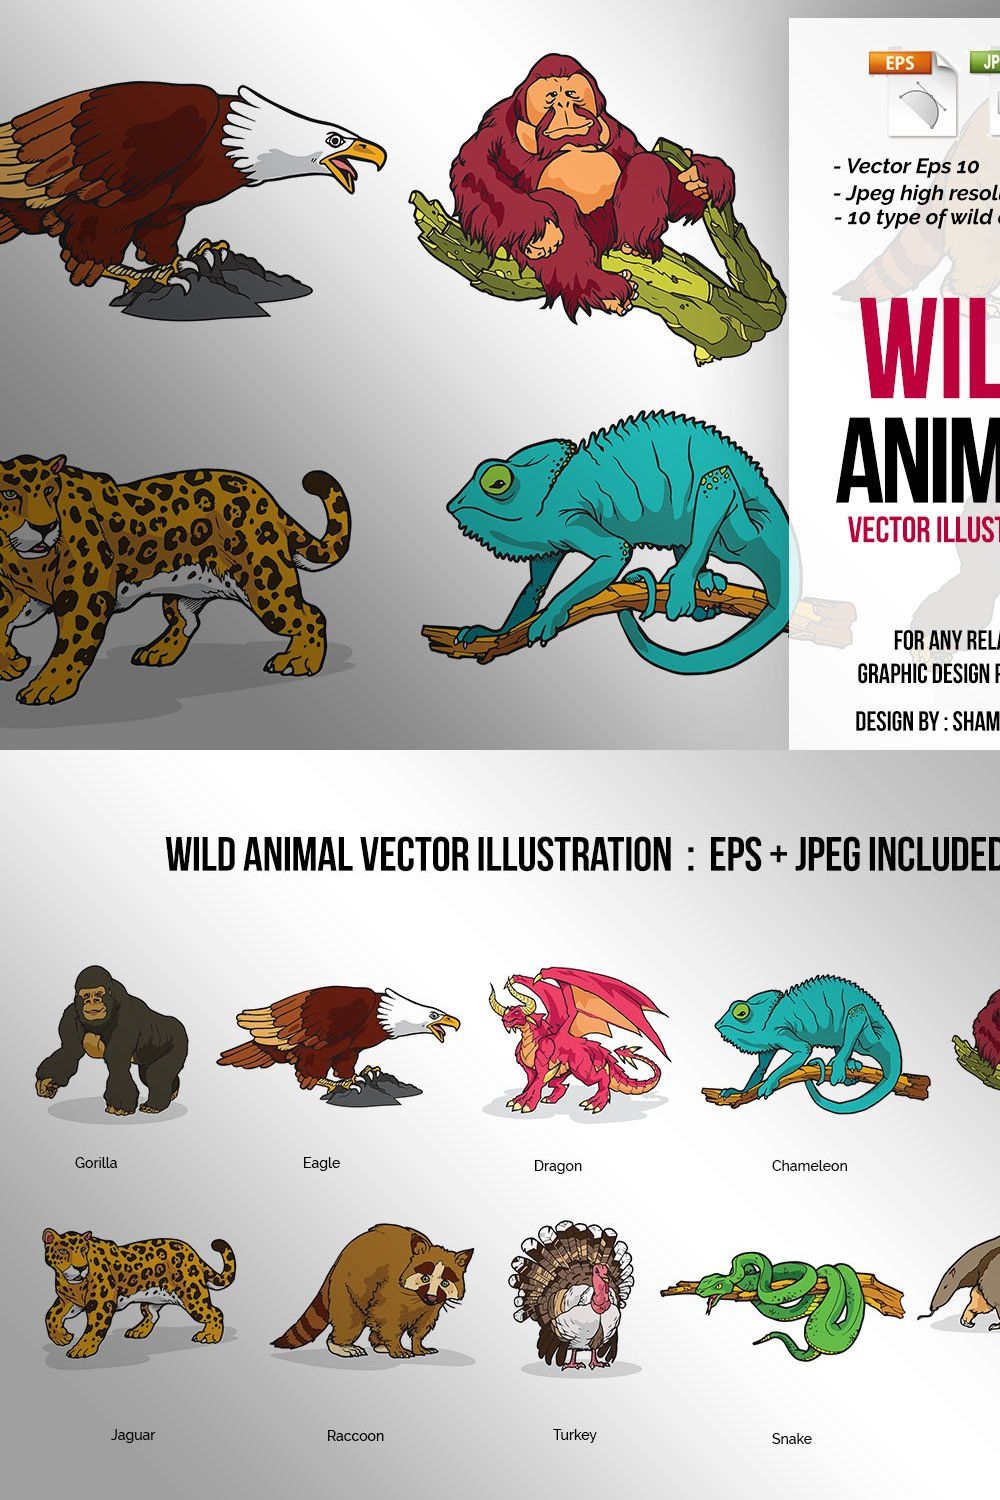 Wild Animal Vector Illustration pinterest preview image.